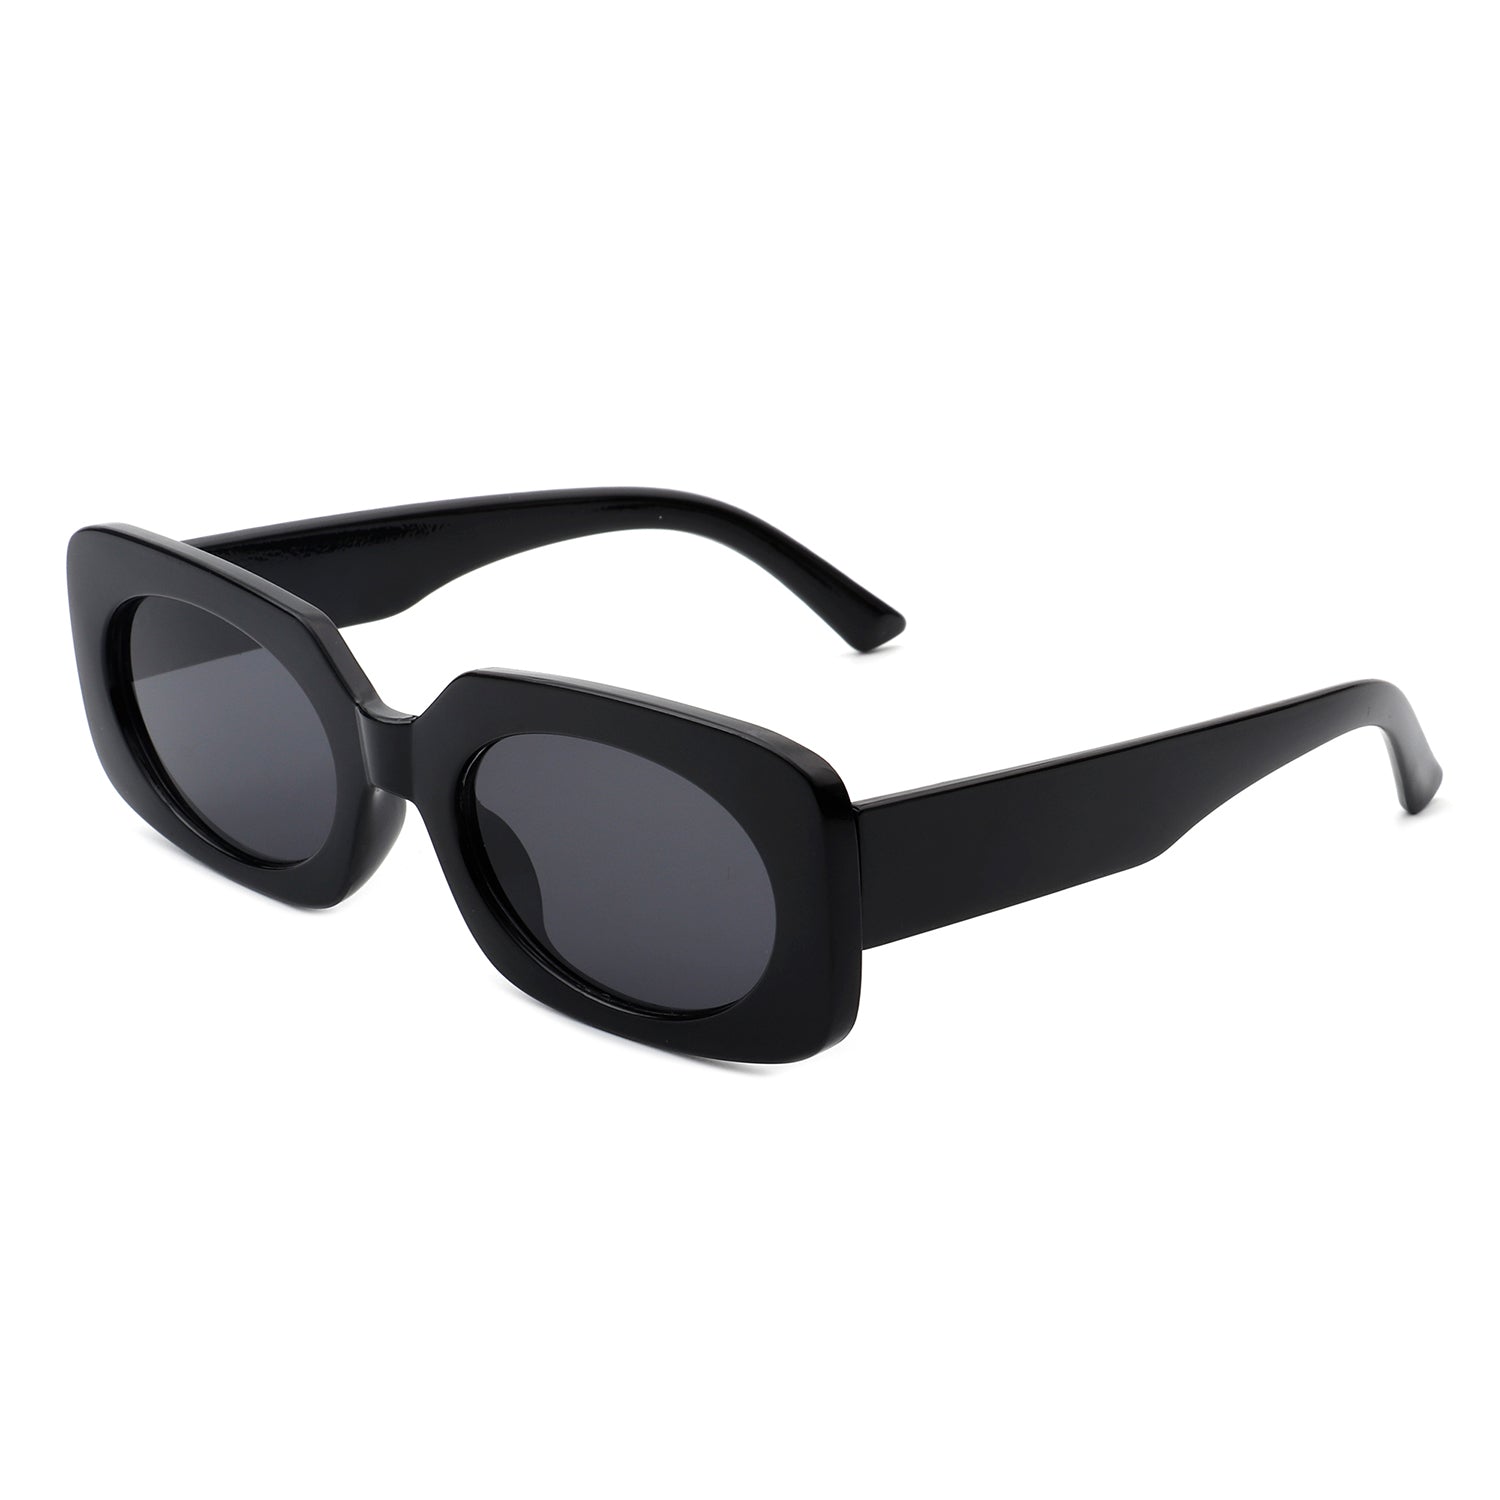 New Oversized Full Square Frame Sunglasses Trendy Fashion Vintage